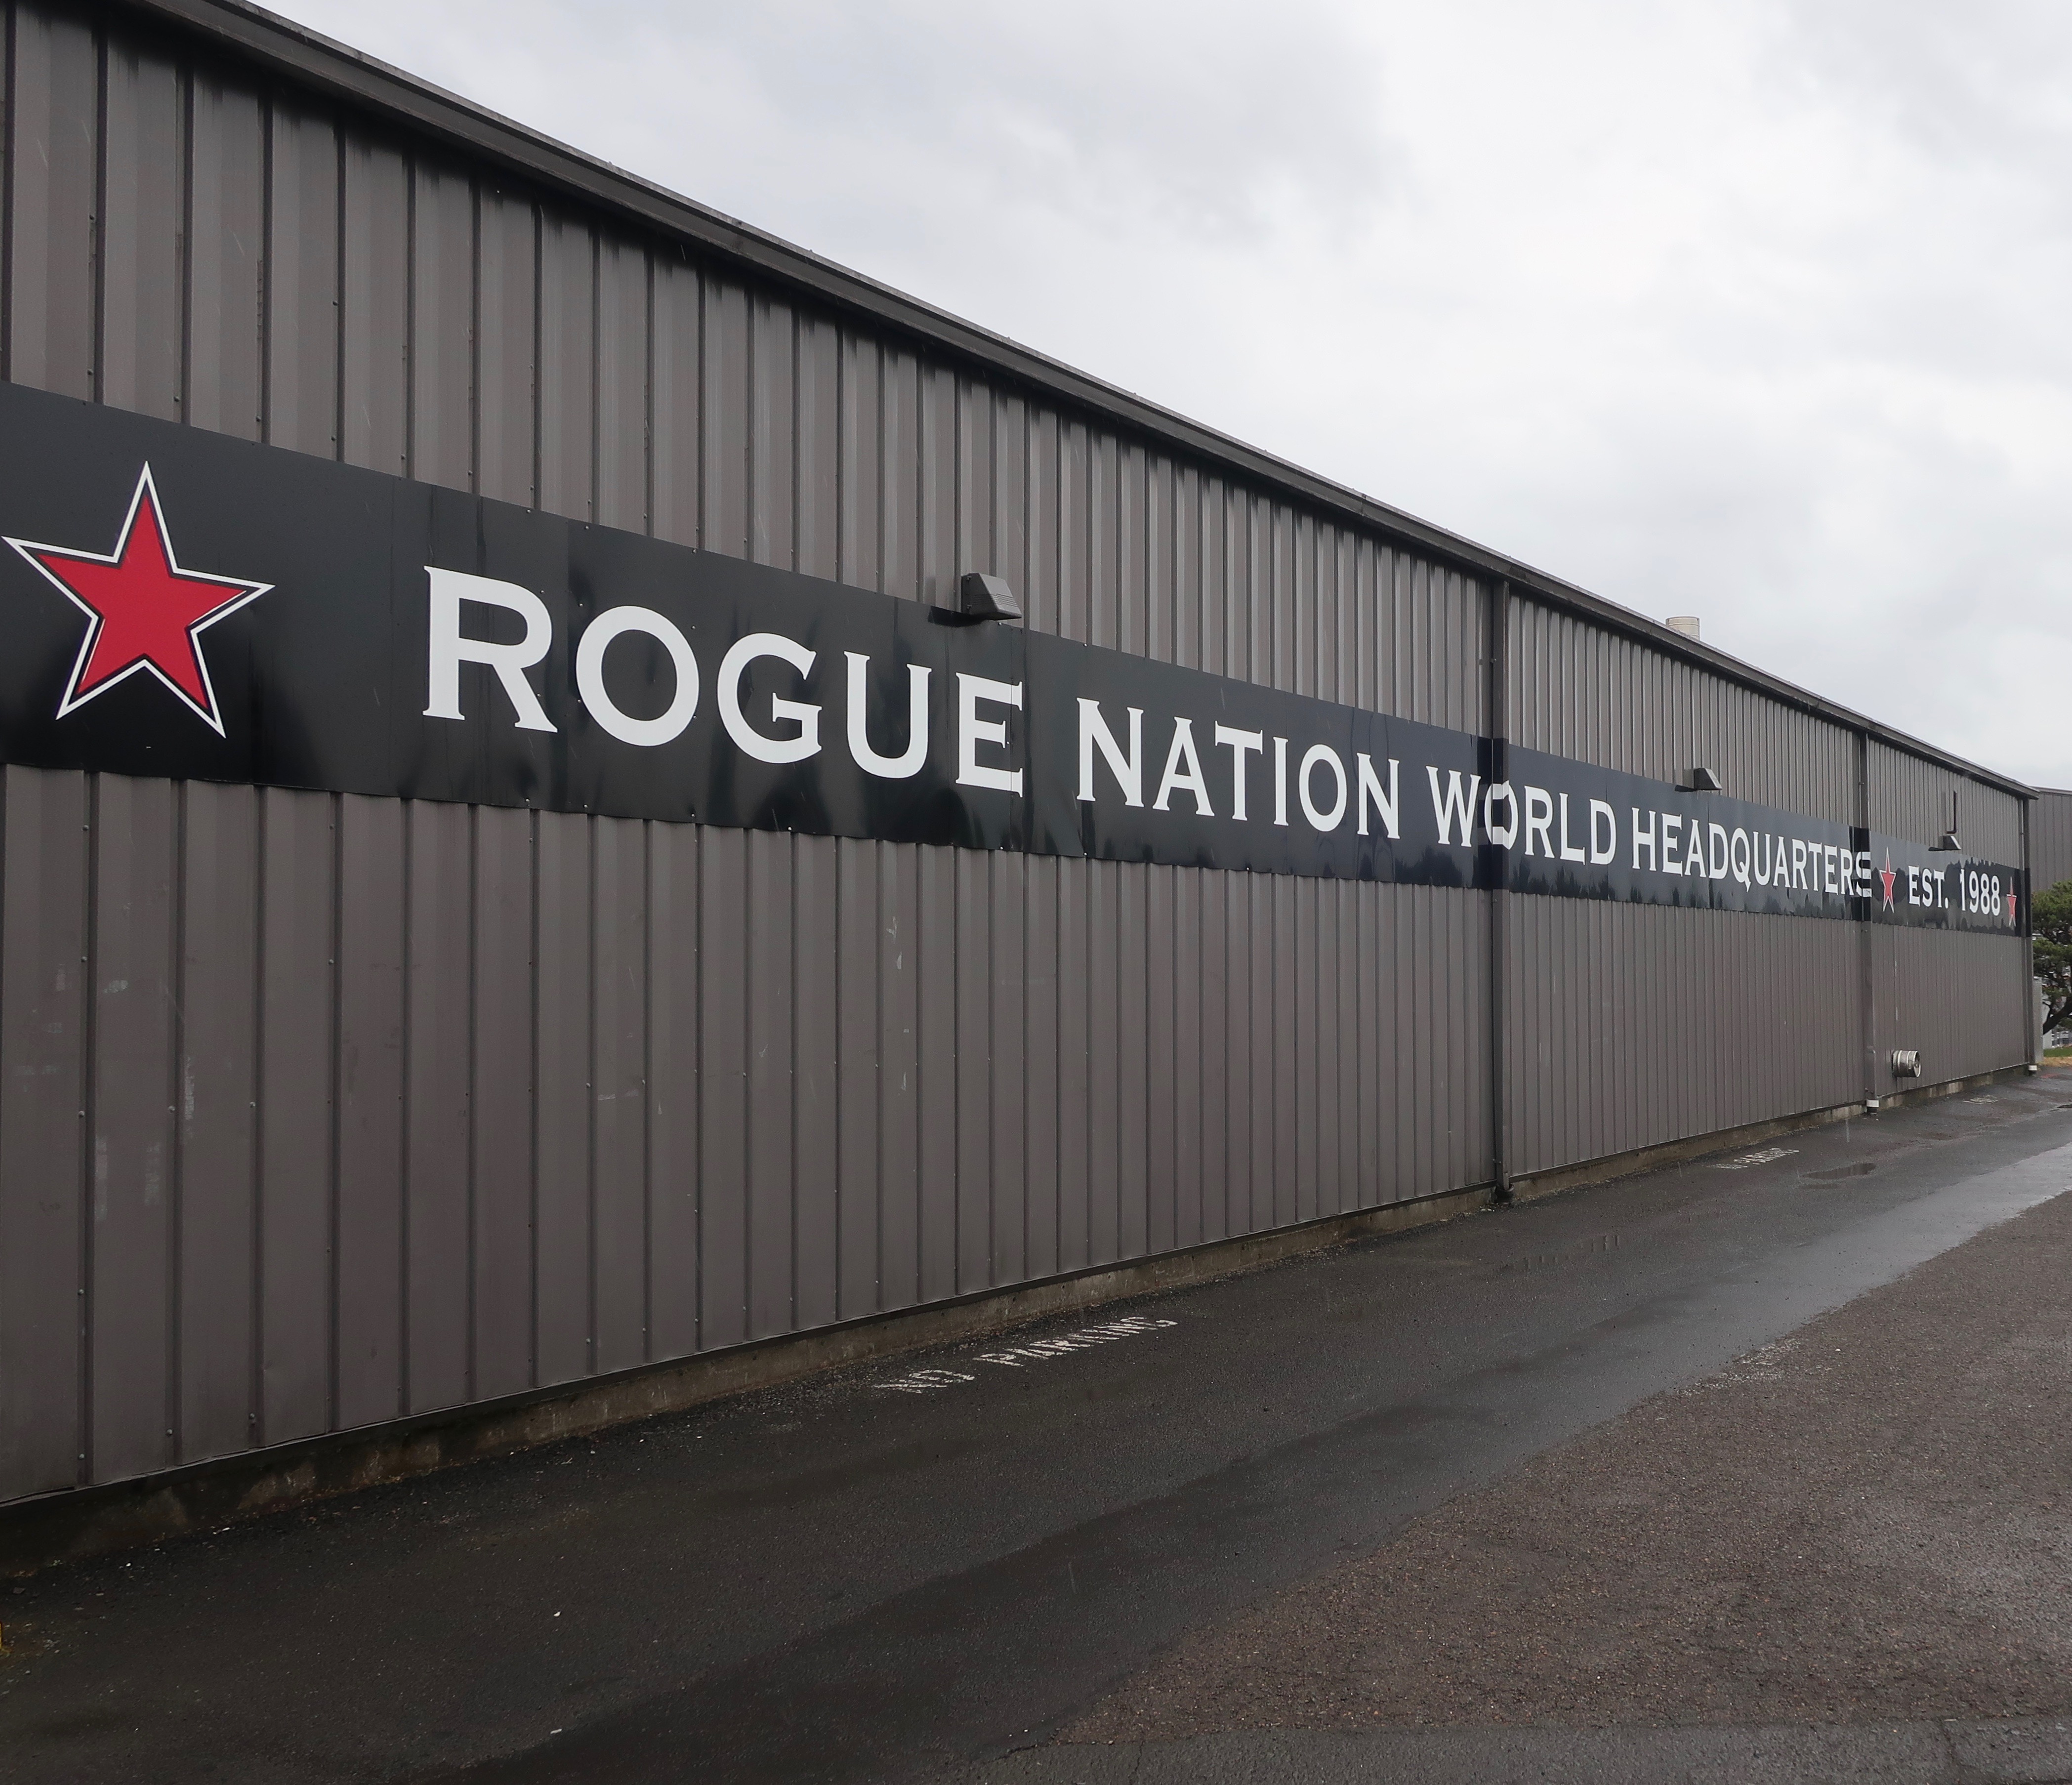 Rogue Nation World Headquarters in Newport, Oregon.